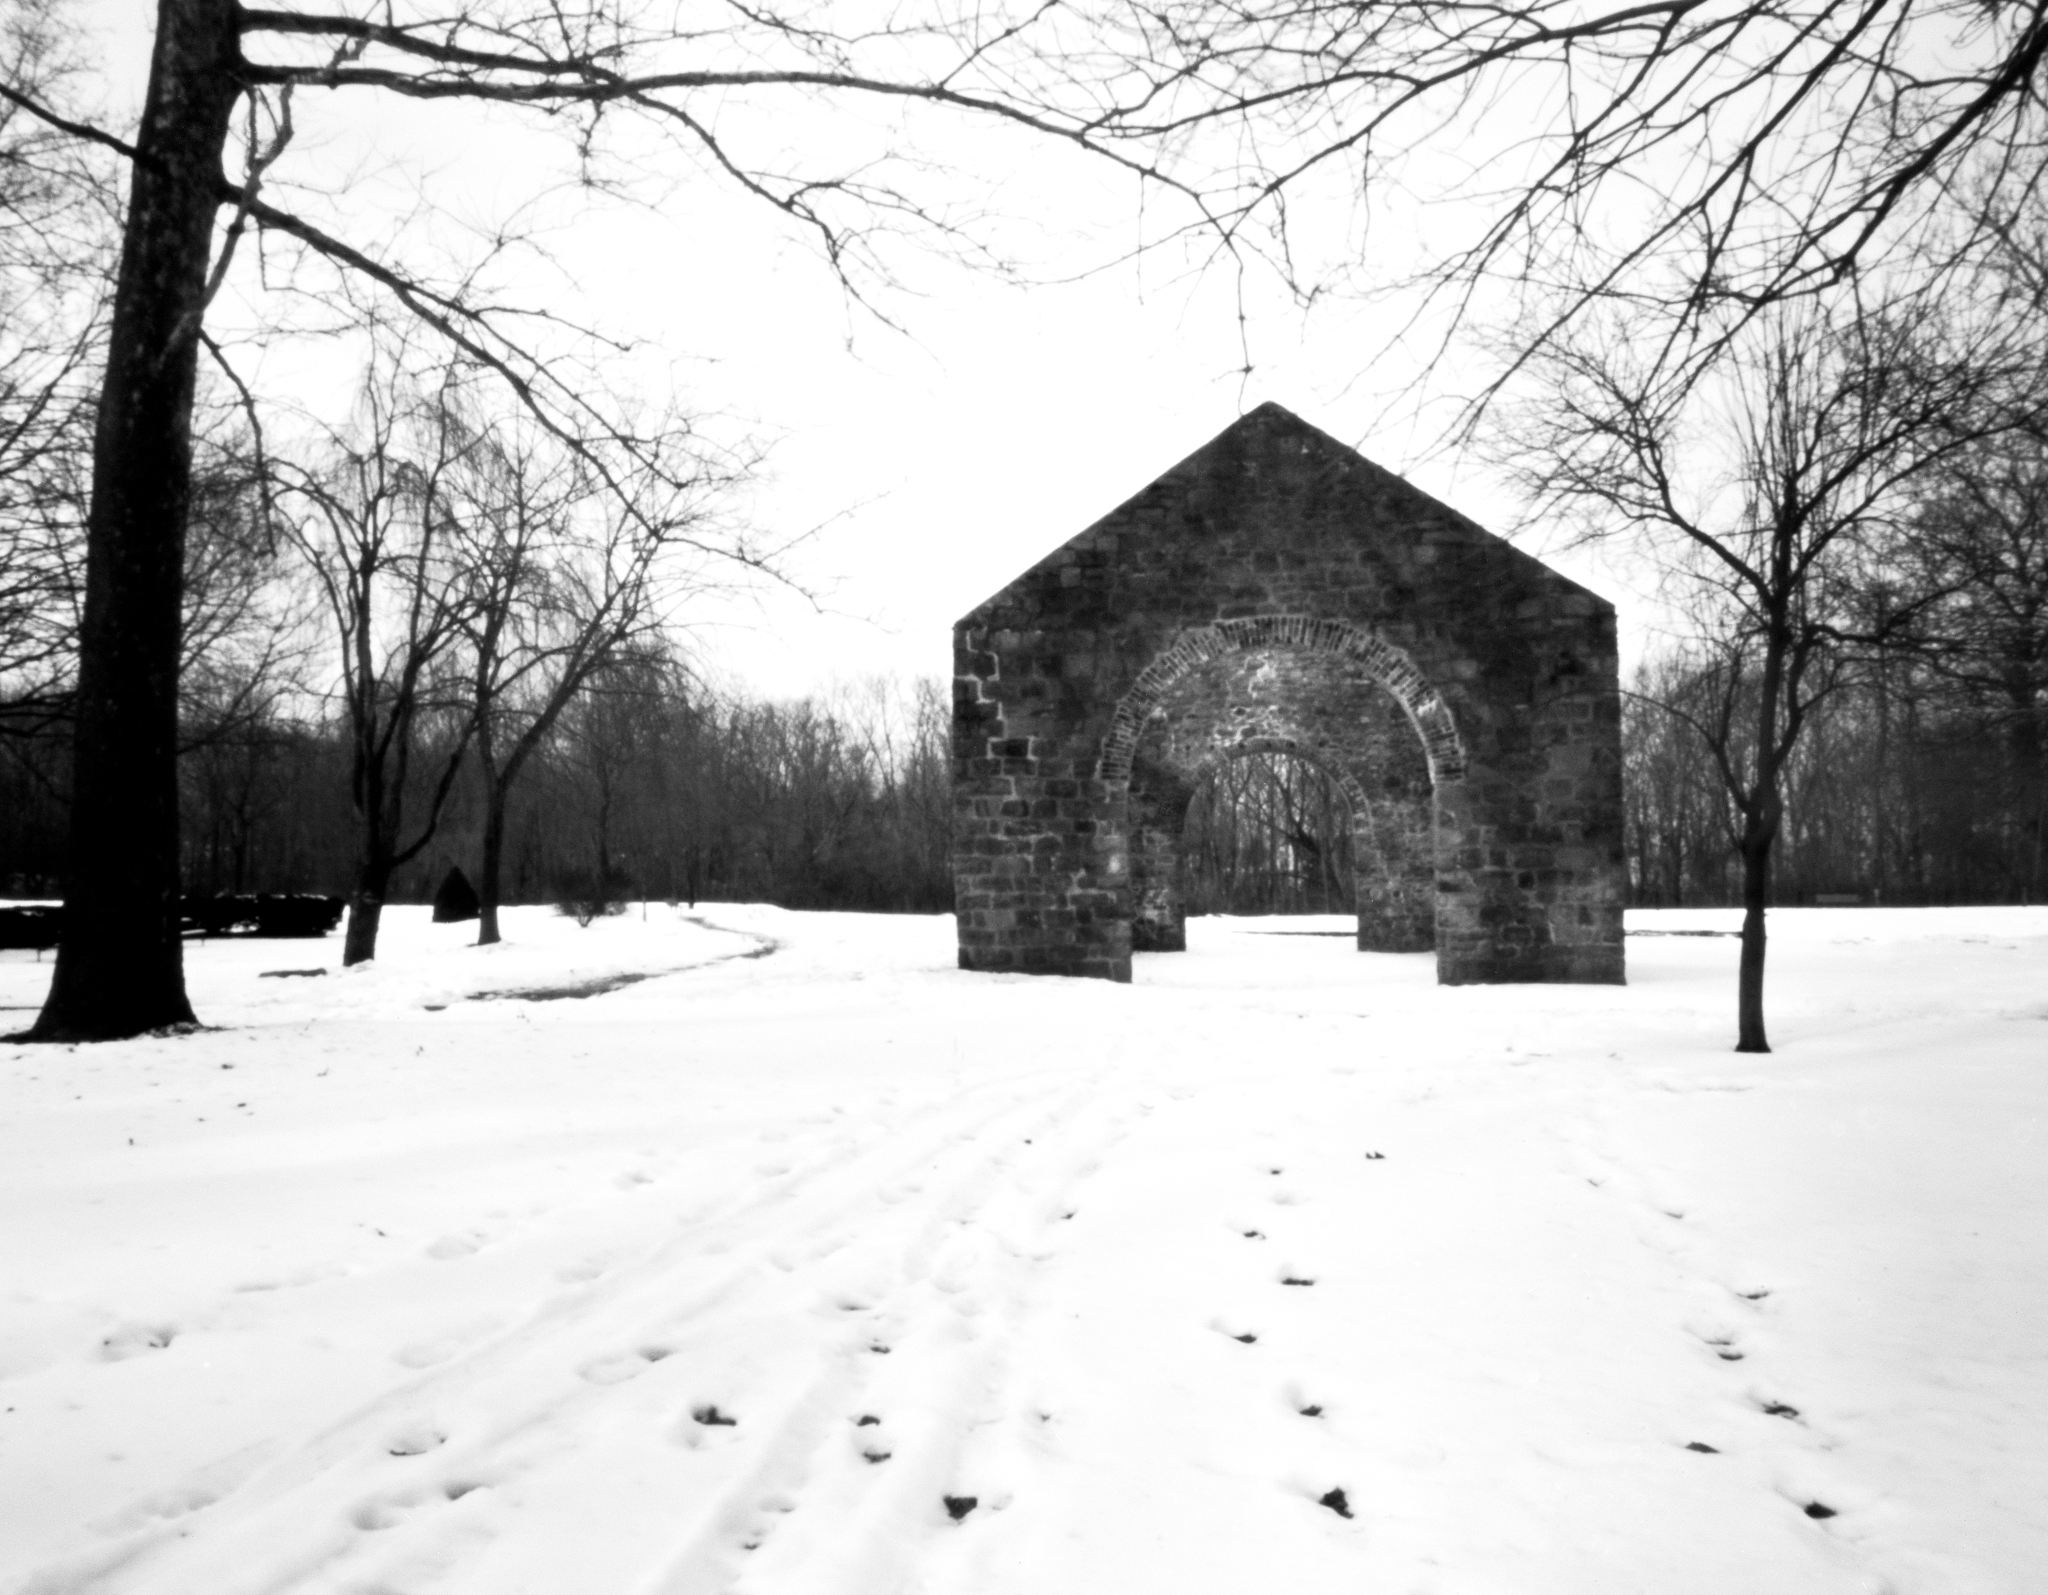  Lockridge Furnace ruins.&nbsp; Alburtis, Pennsylvania.&nbsp;&nbsp;Rob Kauzlarich built 90mm 4x5. 